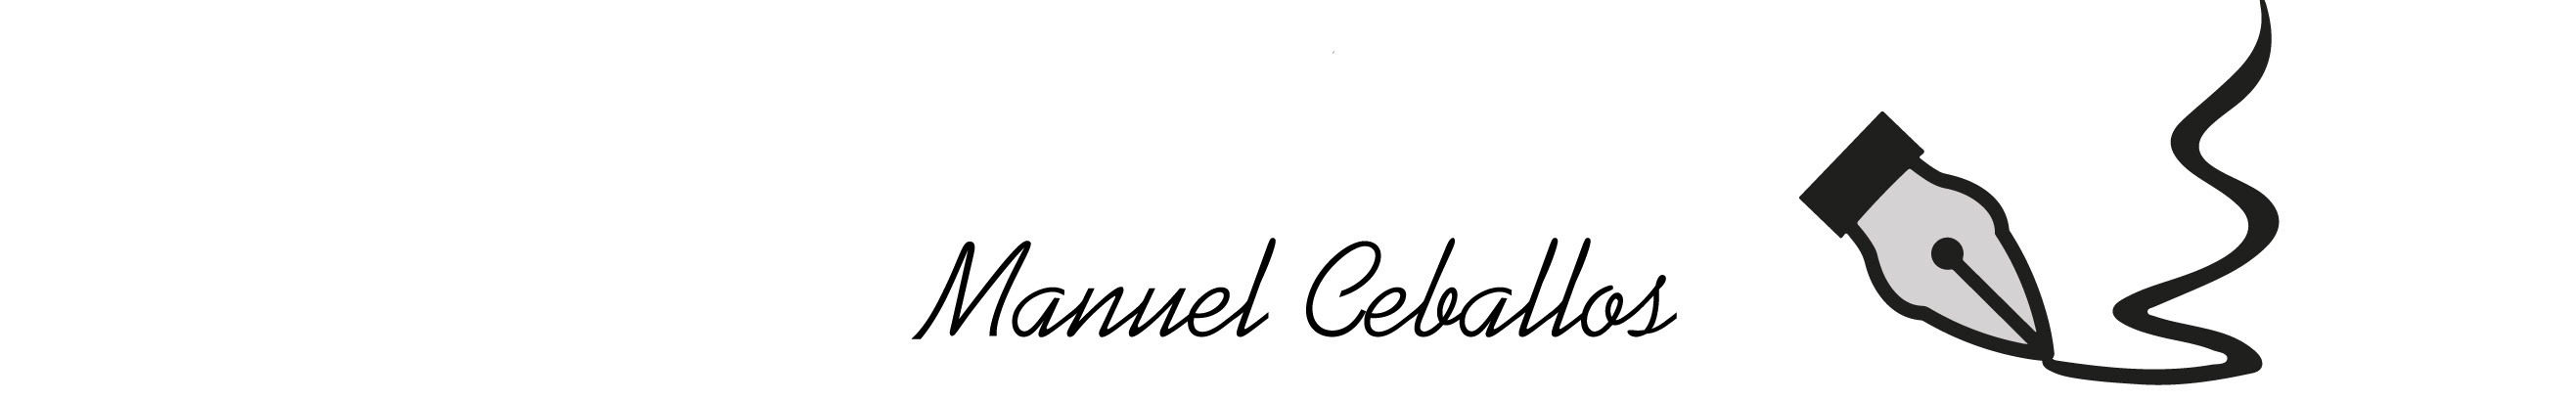 Manuel Ceballos profil başlığı